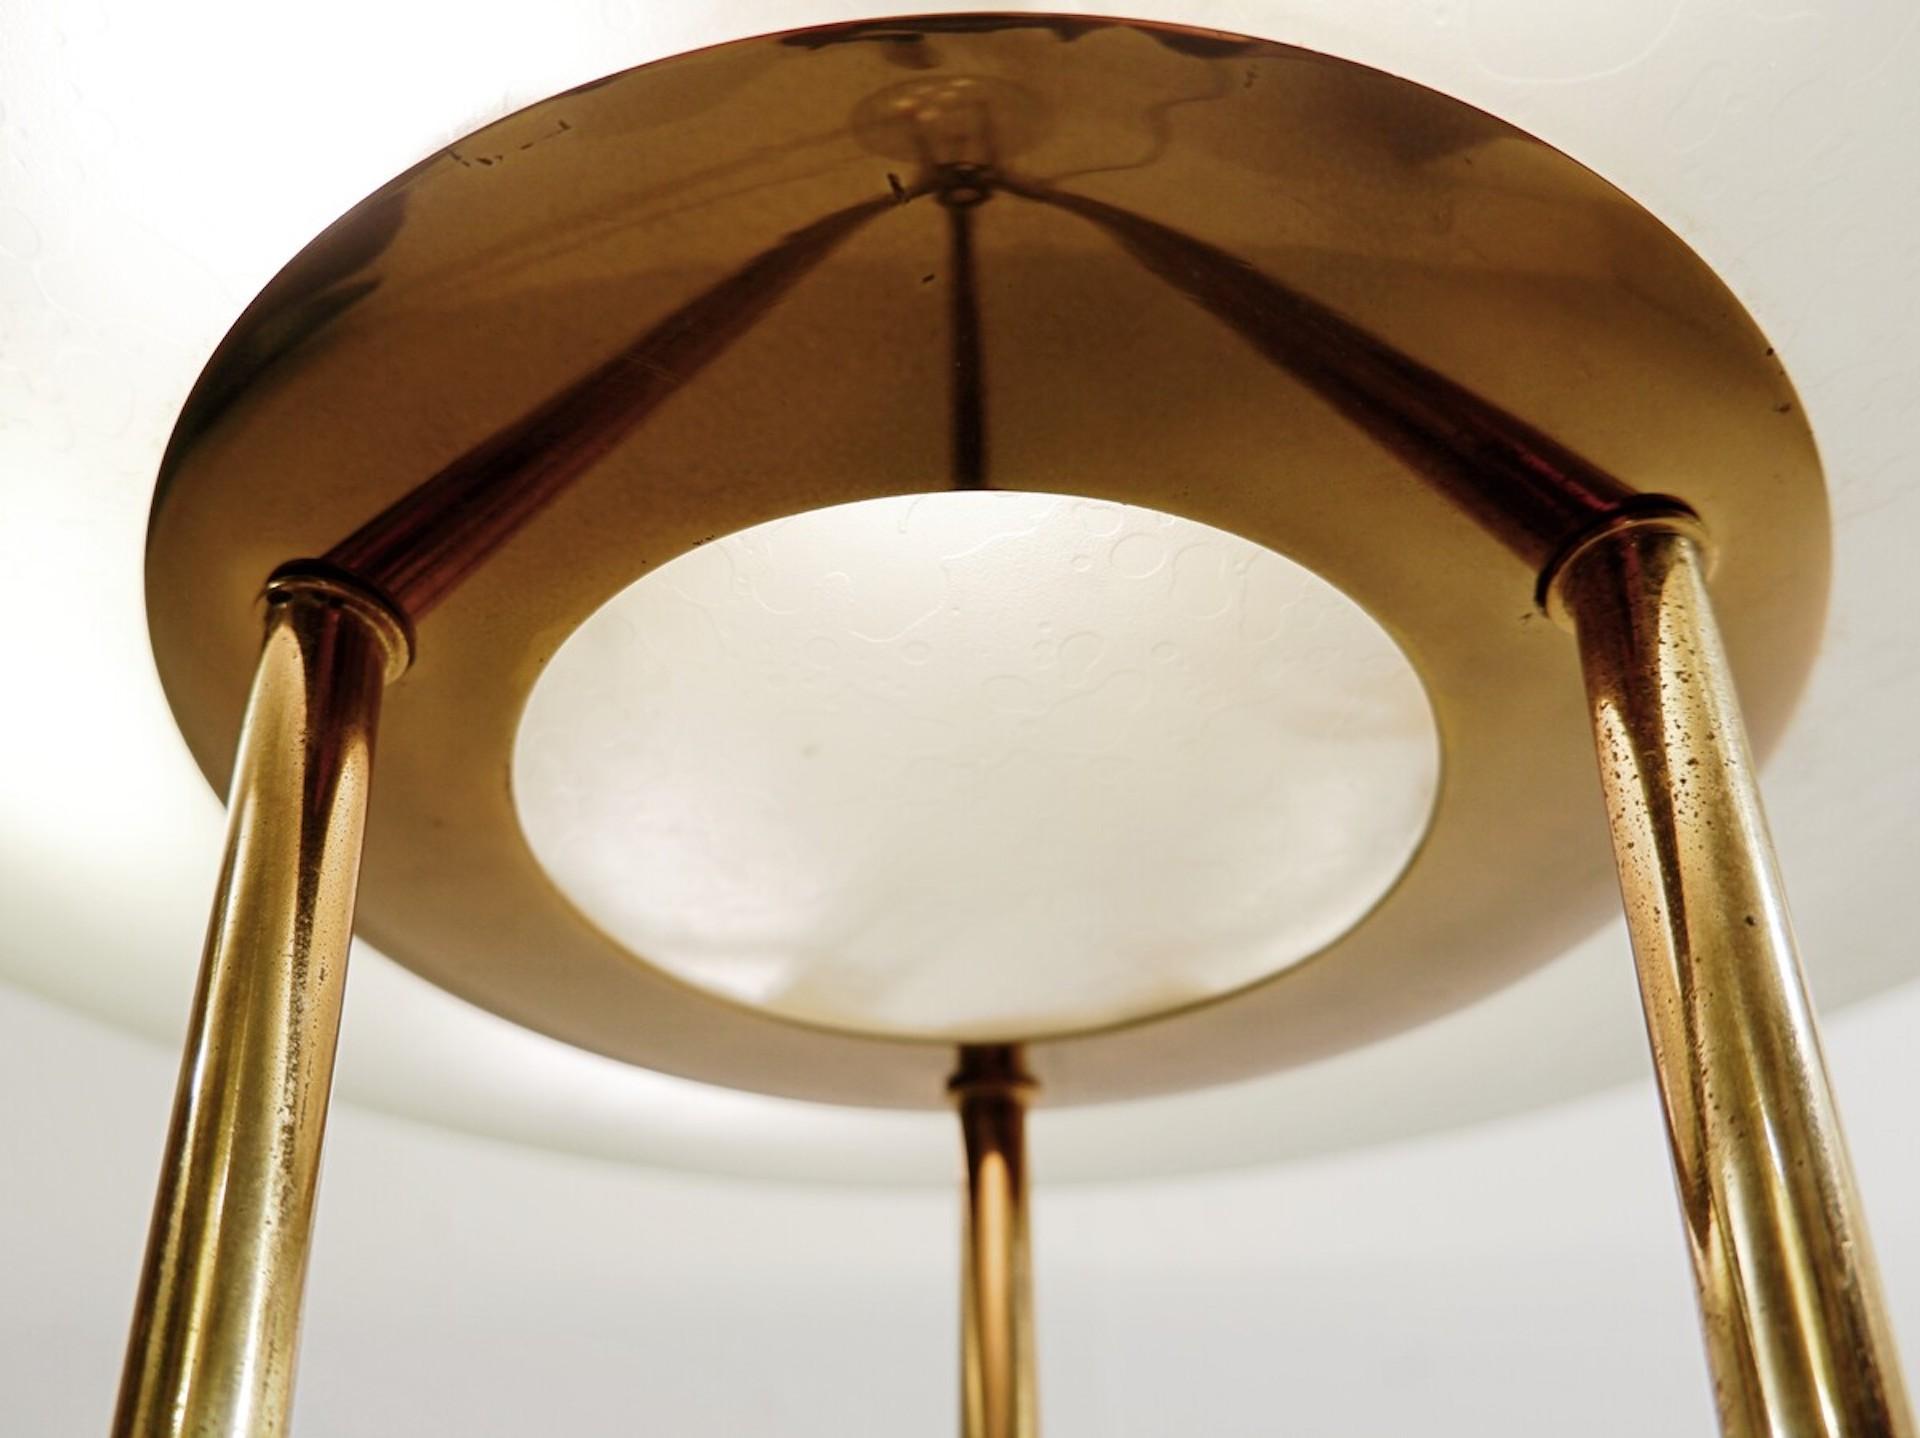 Italian Mid-Century Modern Floor Lamp by Gaetano sciolari for Stilnovo, Italy 1950s For Sale